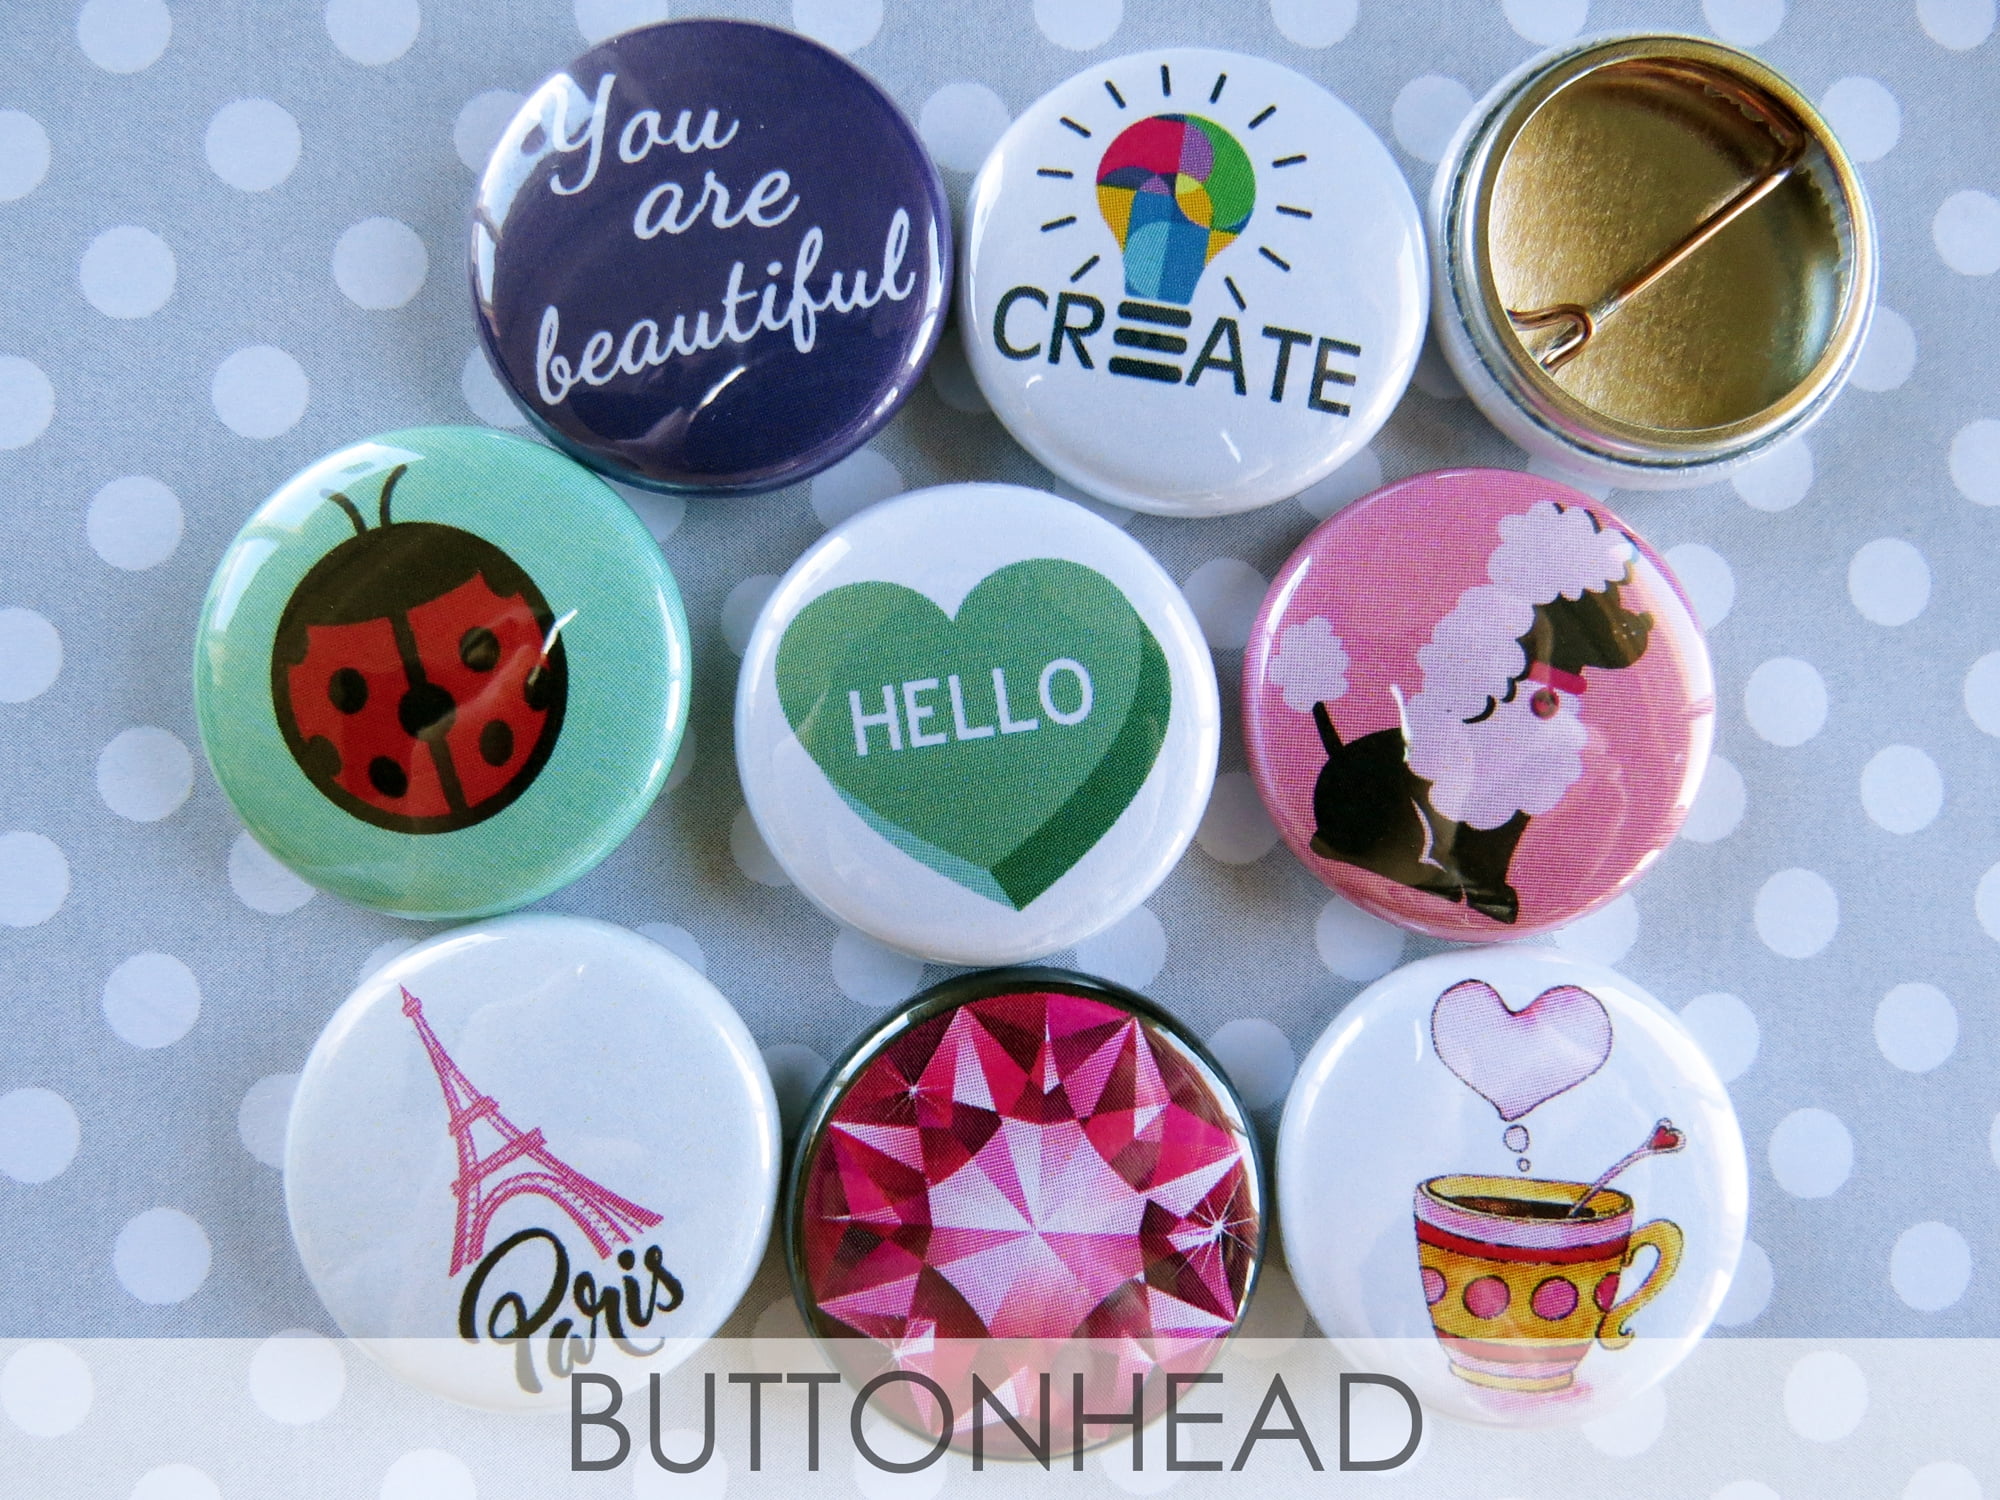 Buttons Pins Theme Sets – Art, Cute, Funny, Geeky, Political, Punk,  Inspirational, School